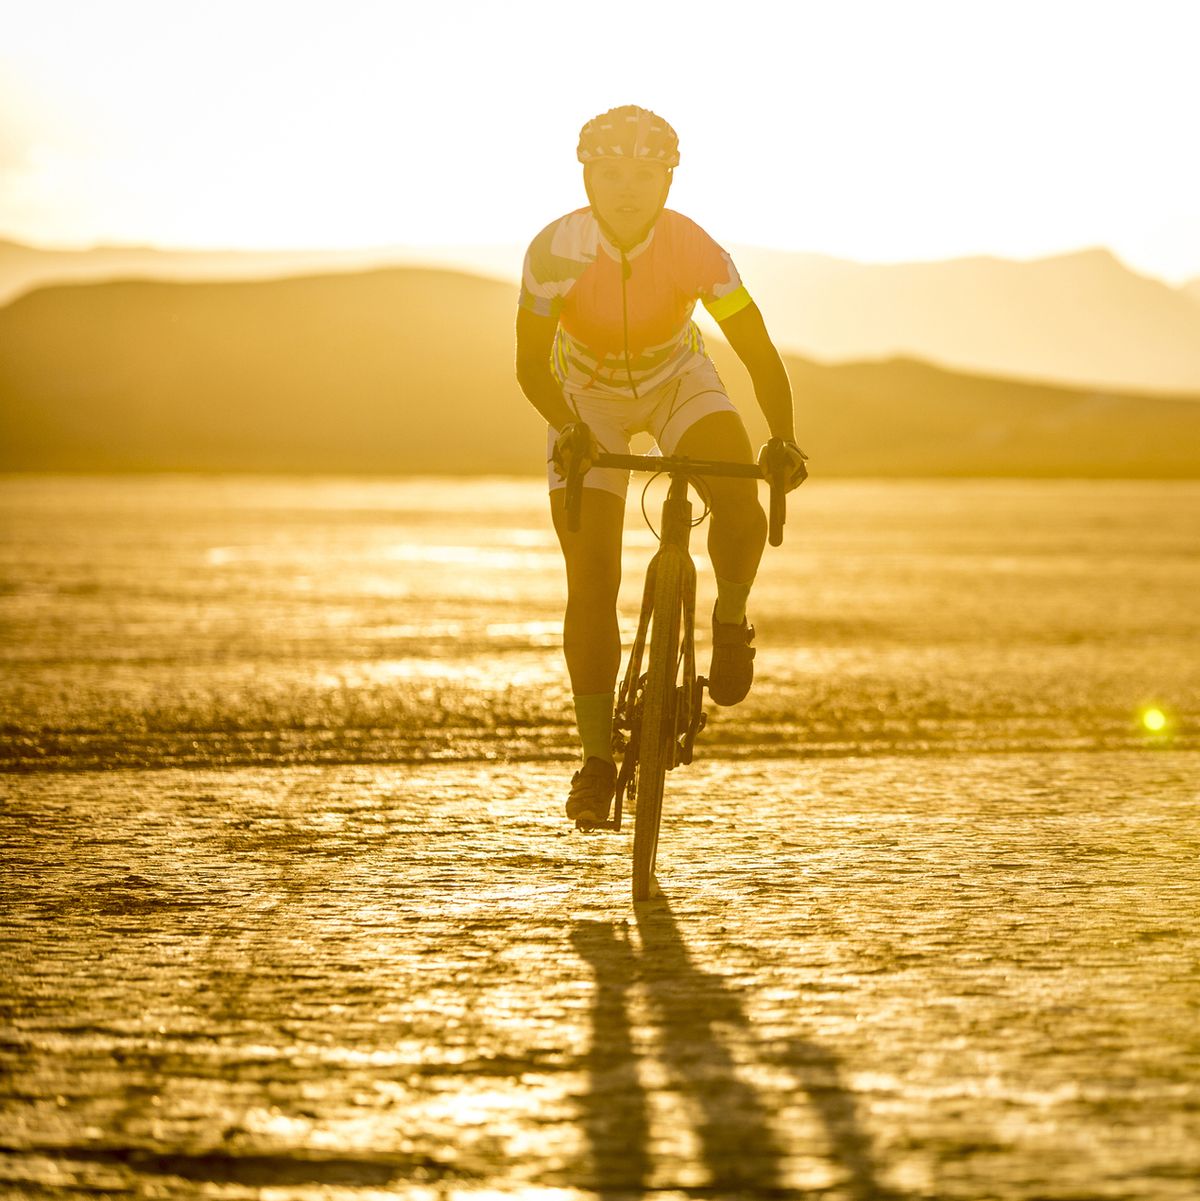 Cyclist riding across desert, Las Vegas, Nevada, USA